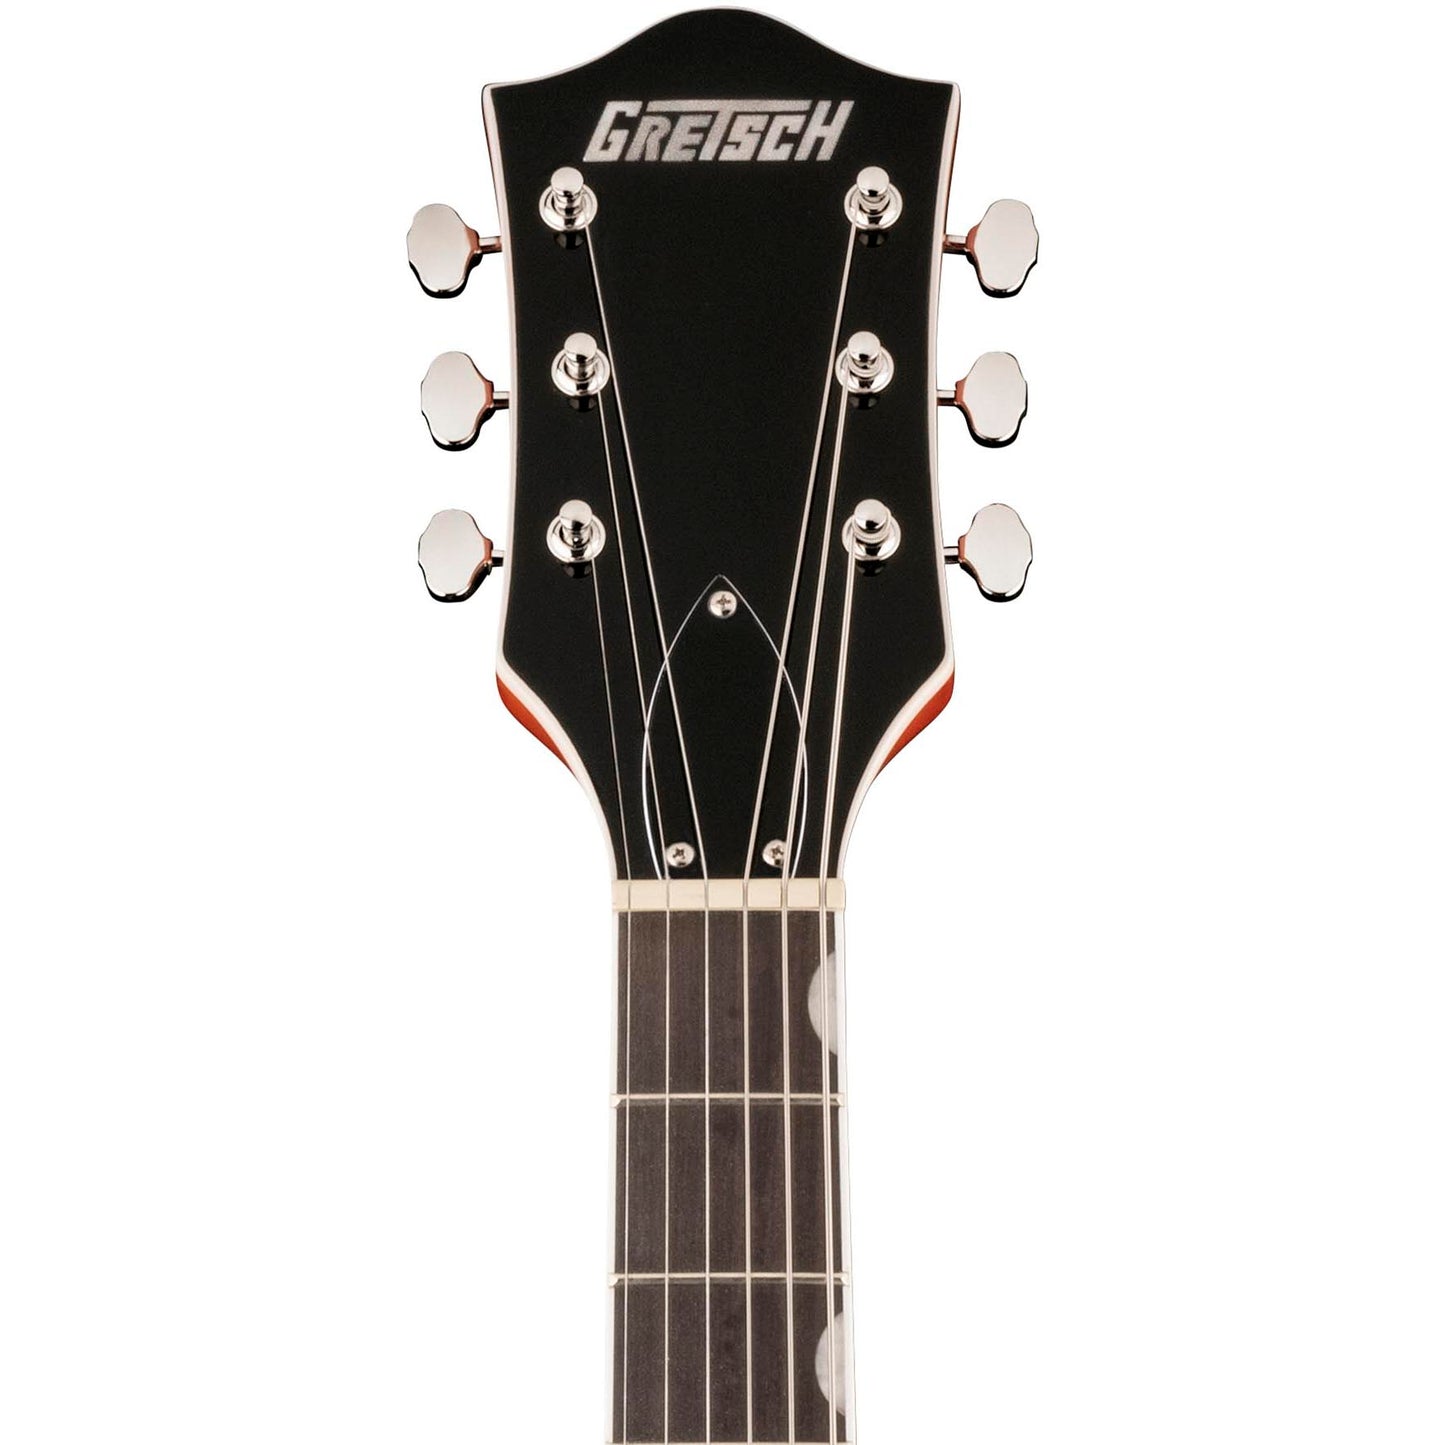 Gretsch G5420LH Electromatic Classic Semi Hollow Electric Guitar in Orange Stain